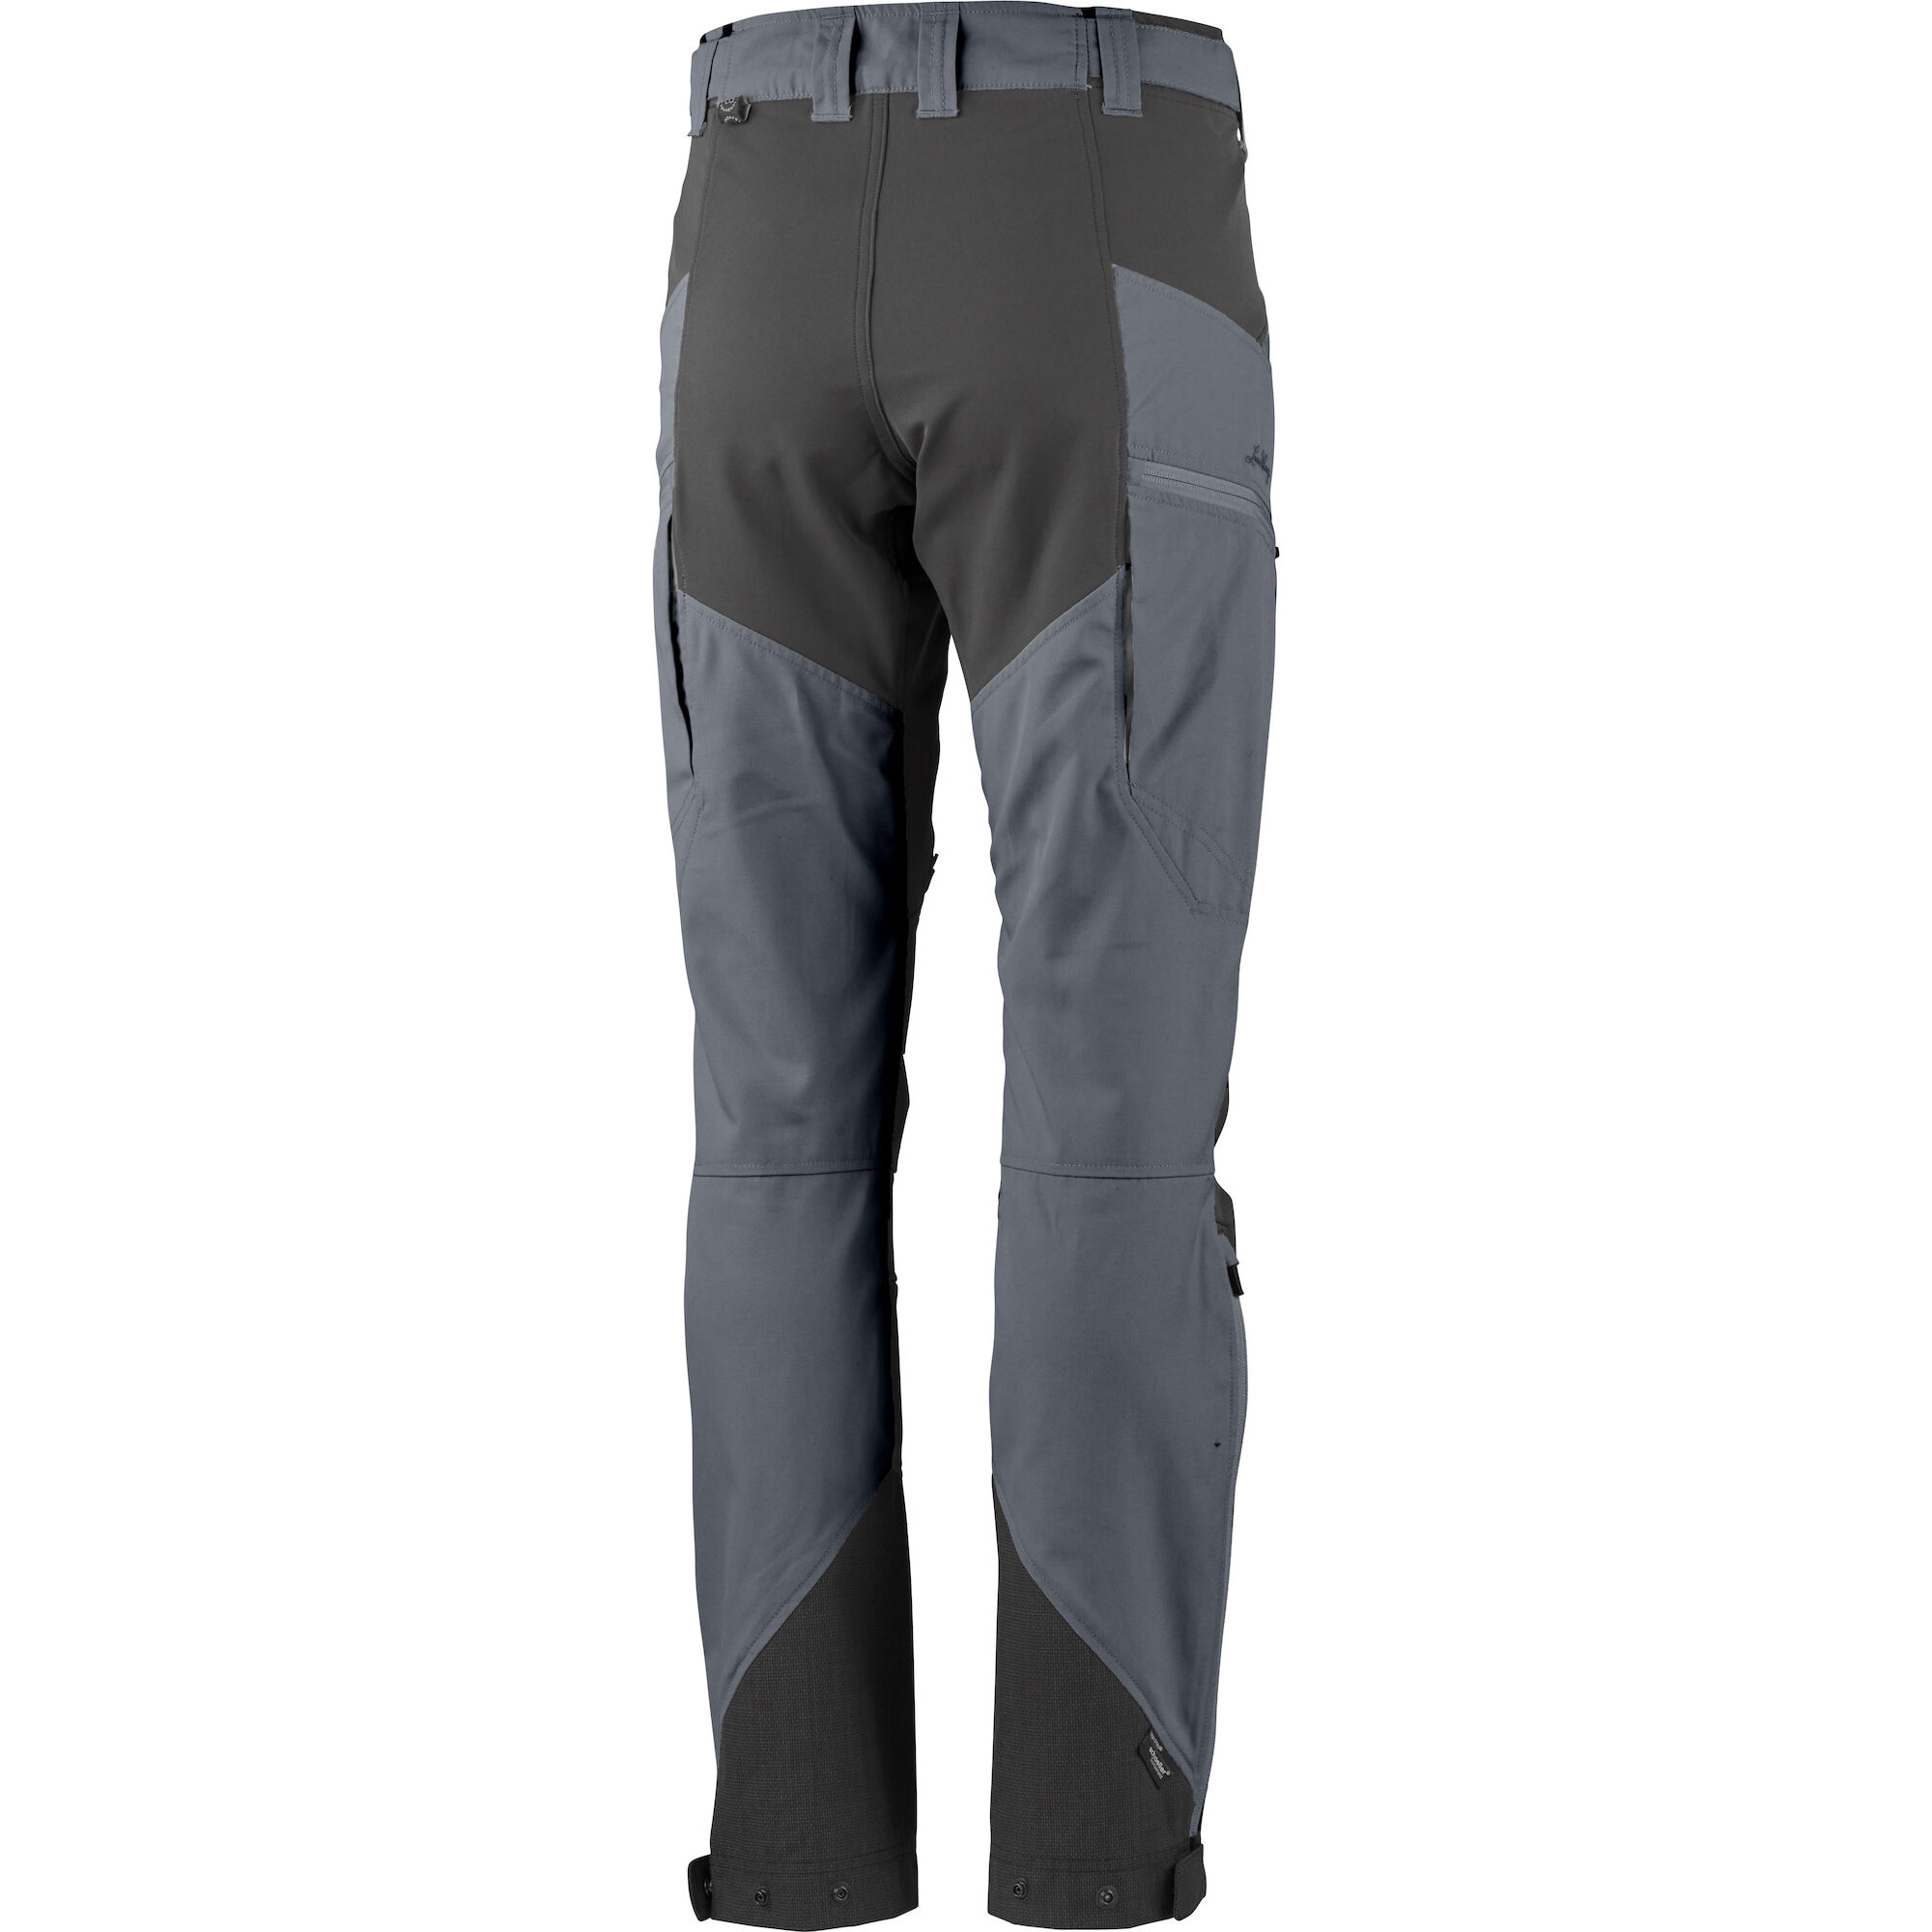 Montura Sound 3/4 Pants Woman - Running Shorts Women's | Buy online |  Alpinetrek.co.uk